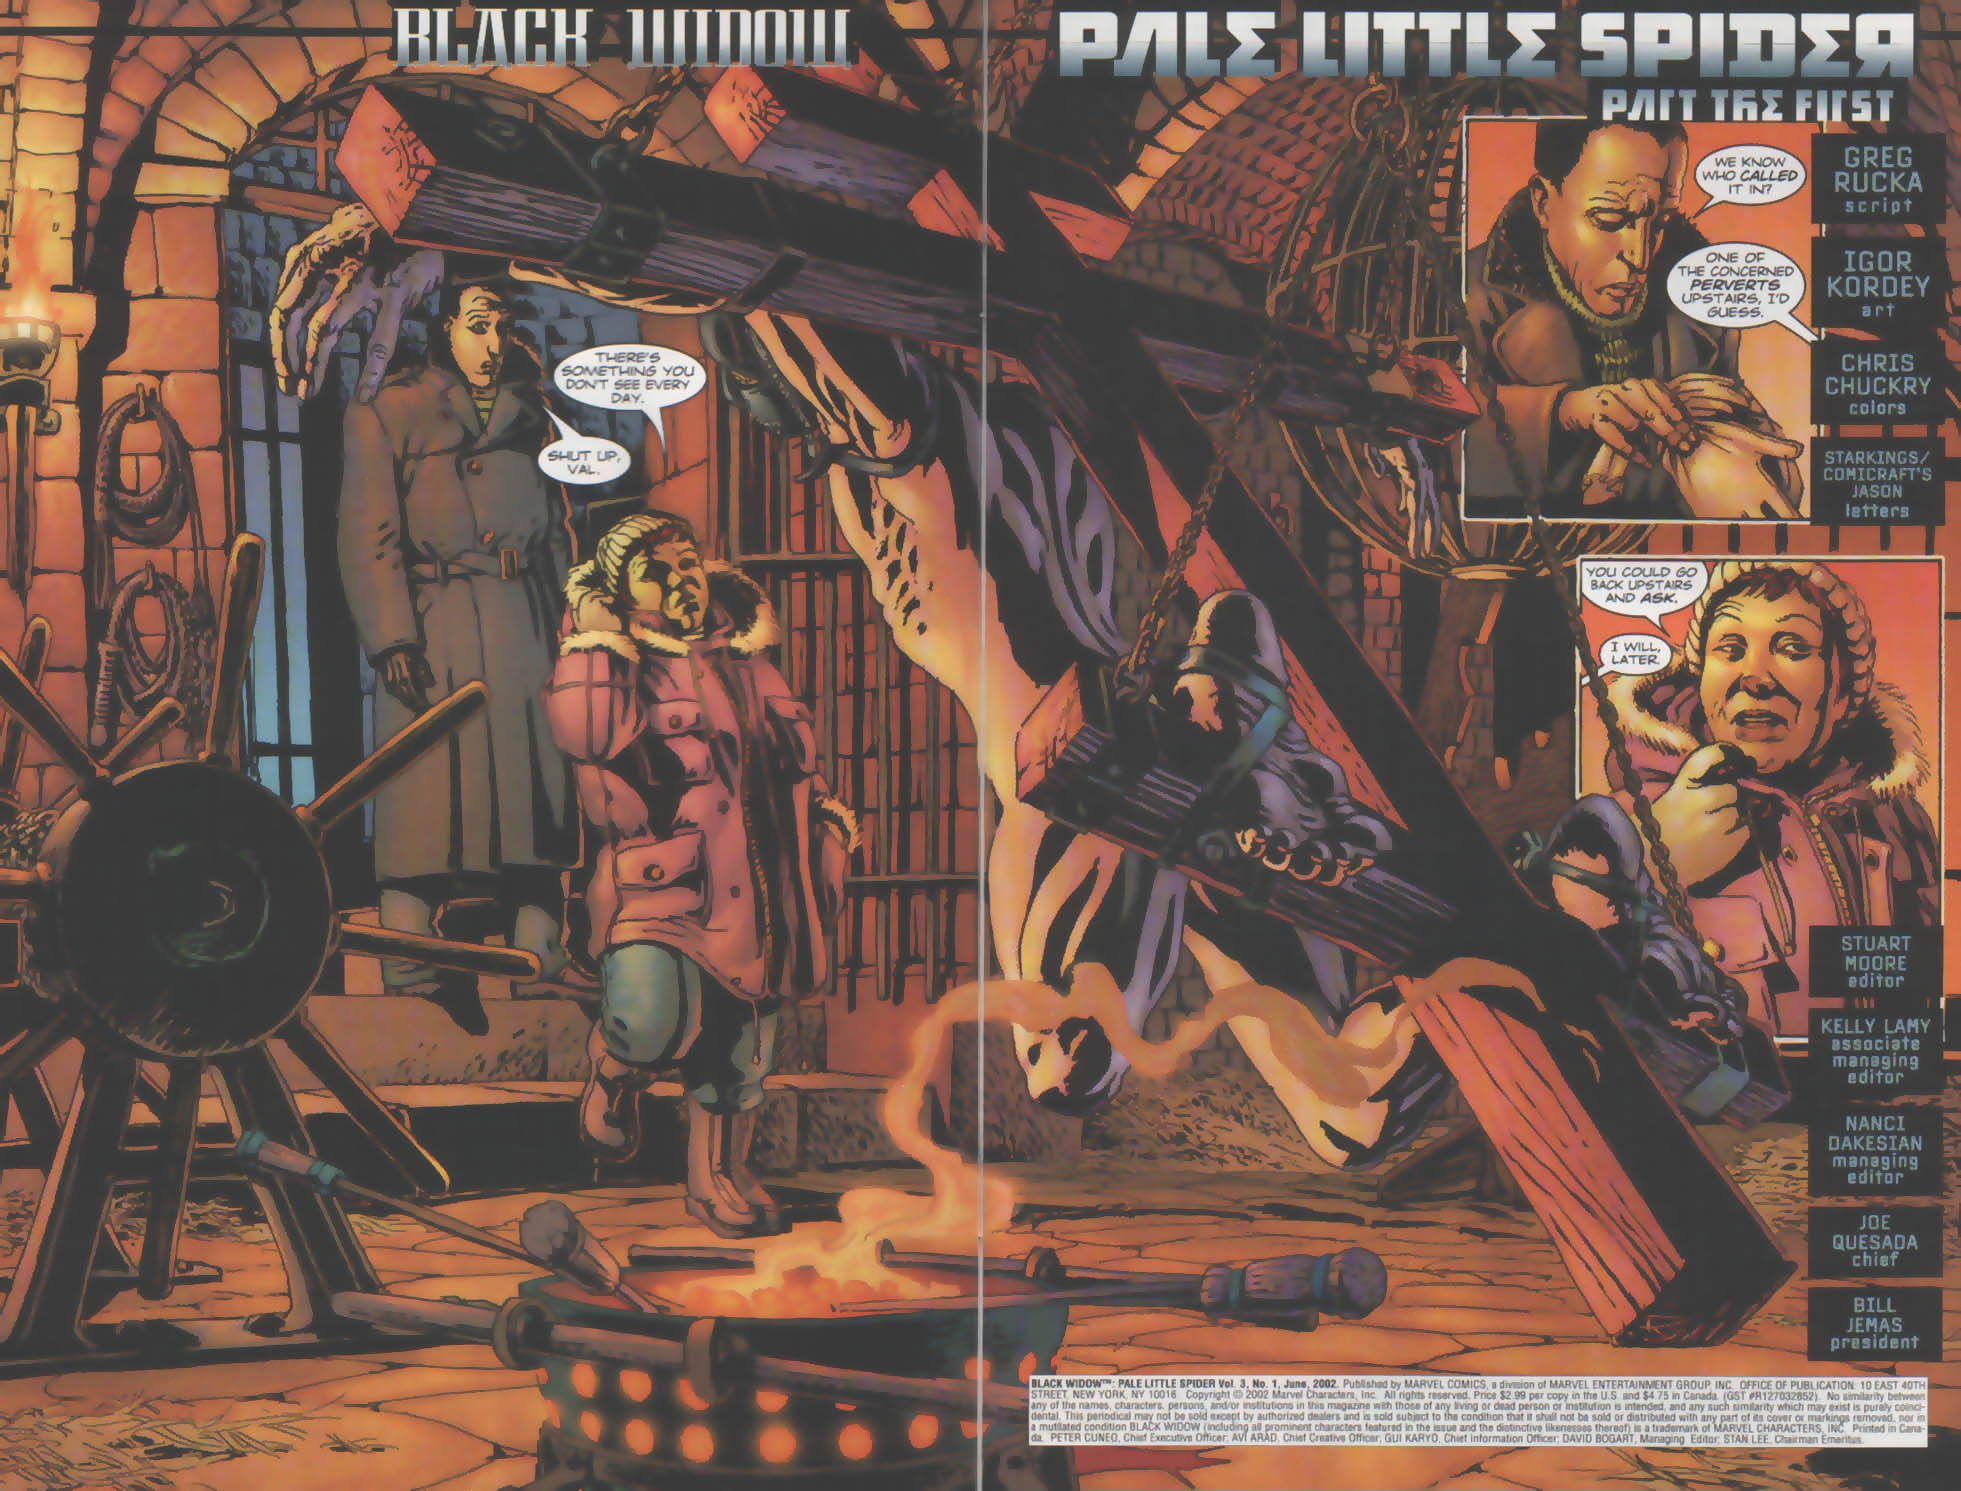 Read online Black Widow: Pale Little Spider comic -  Issue #1 - 3